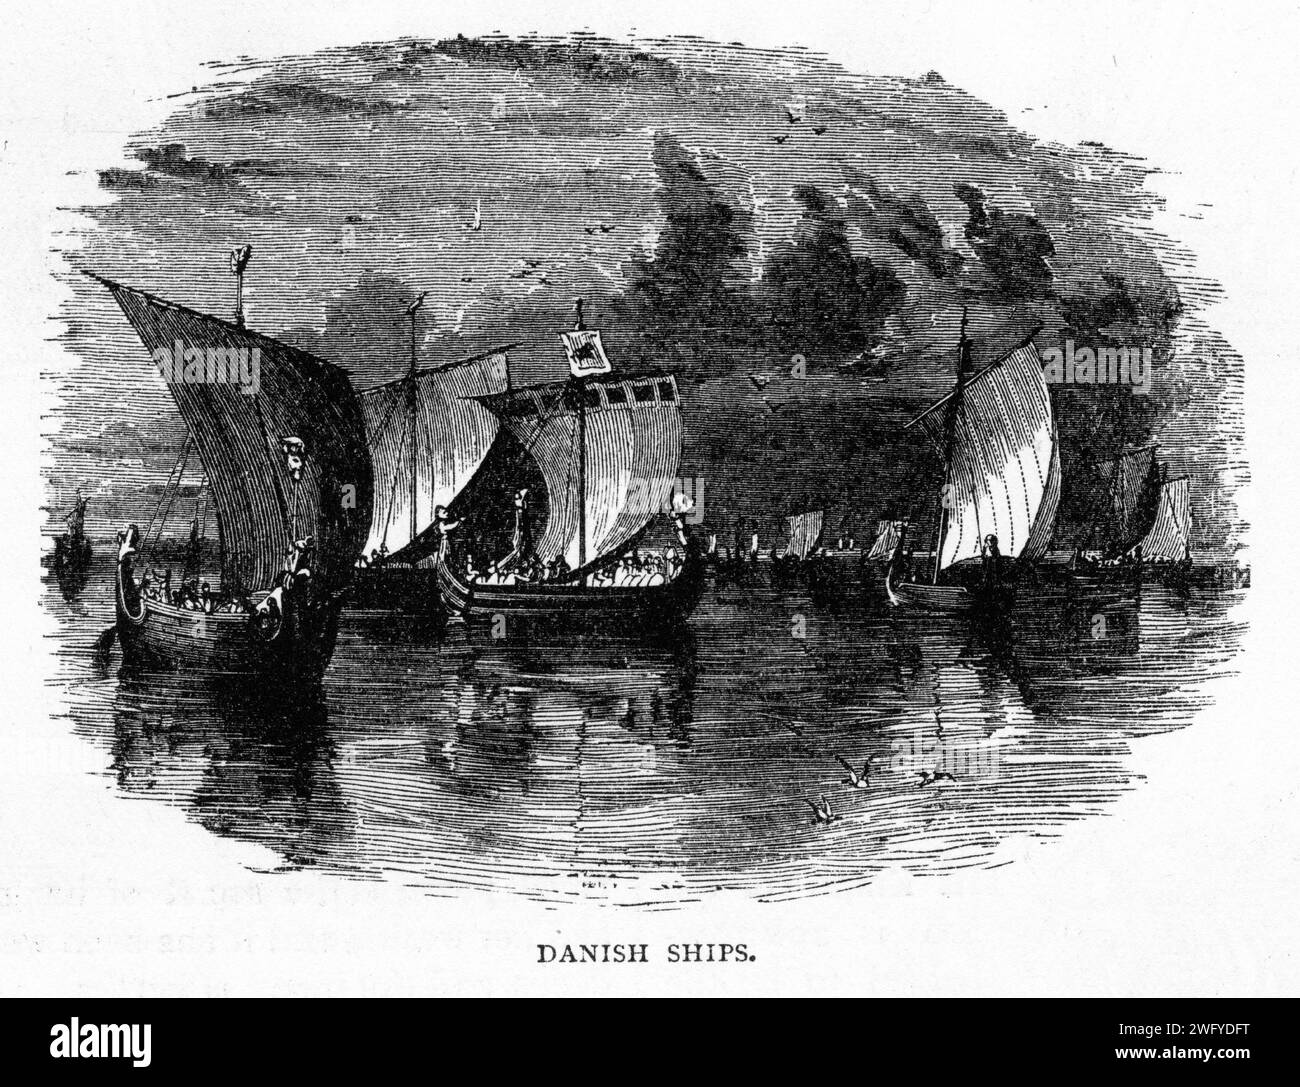 Incisione di una flotta di pescherecci vichinghi danesi, intorno al 1900 Foto Stock